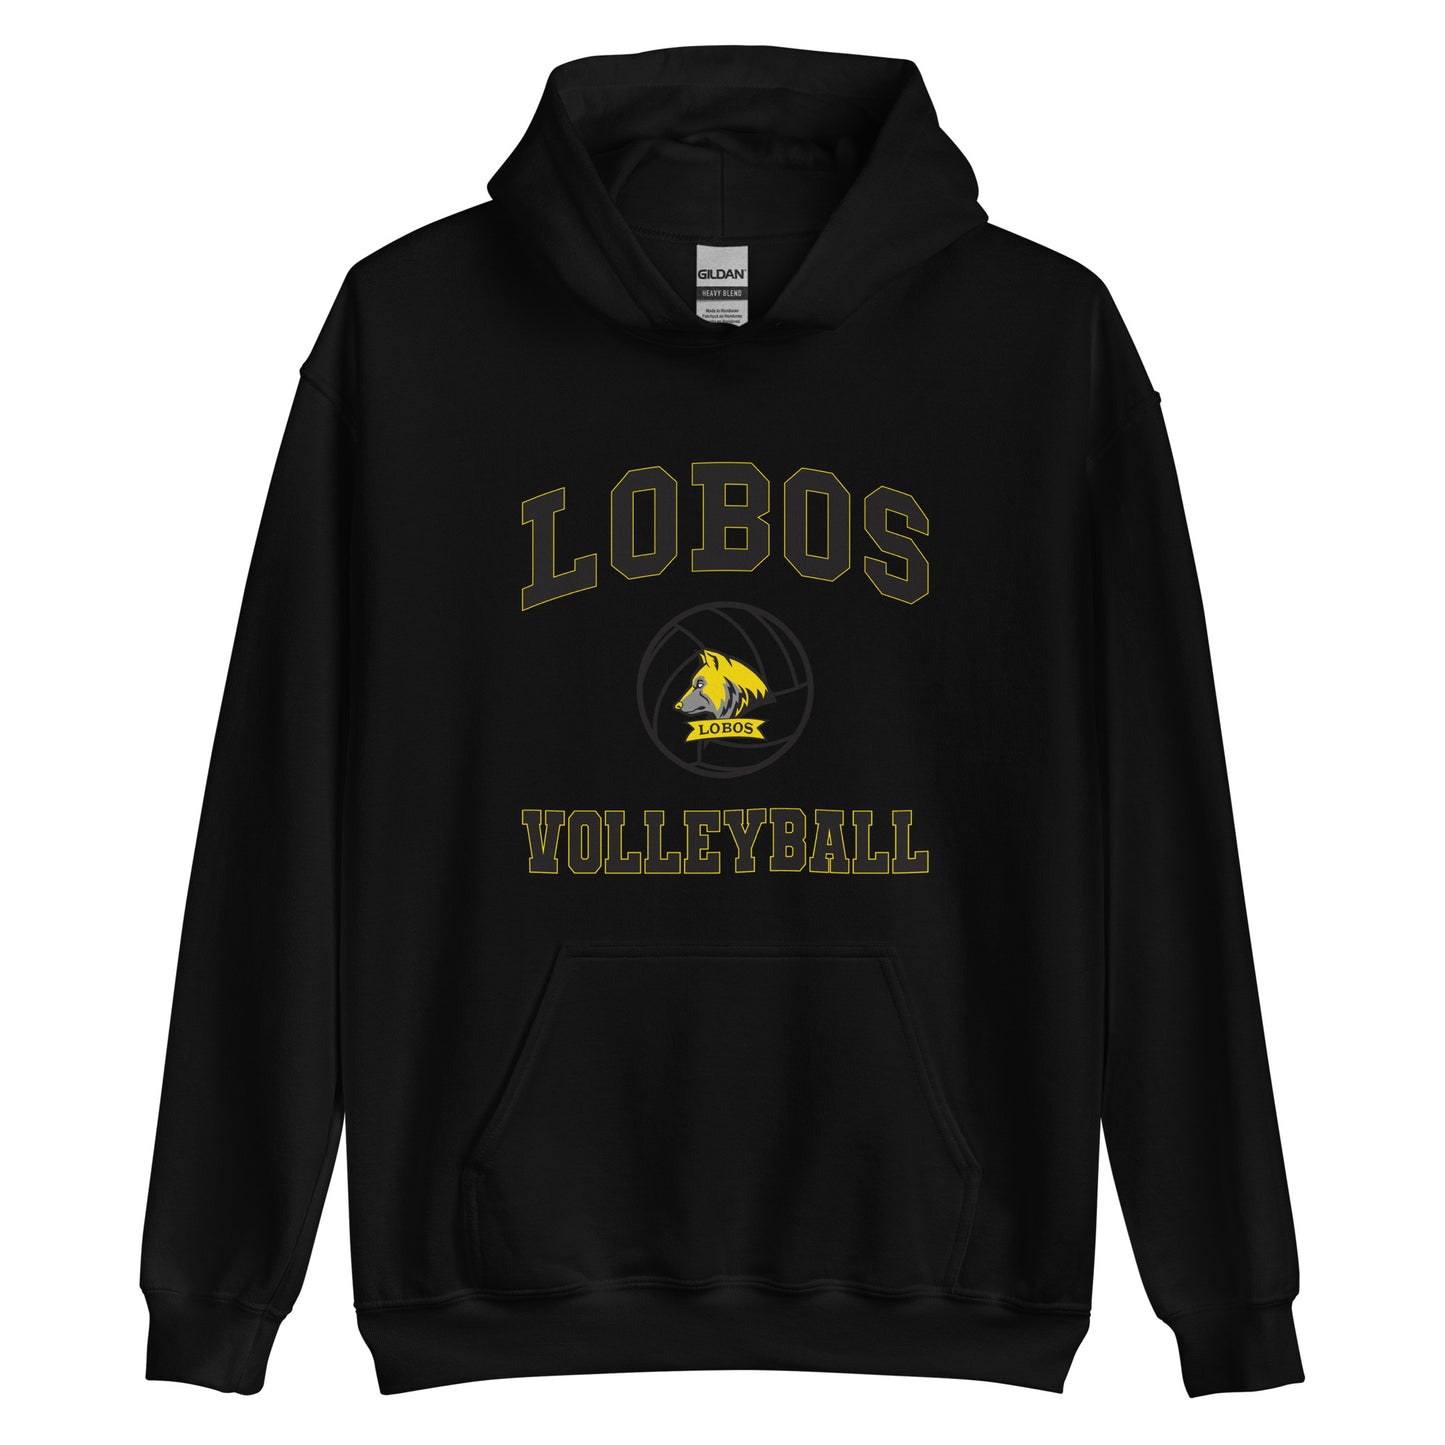 Lobos Volleyball Unisex Hoodie